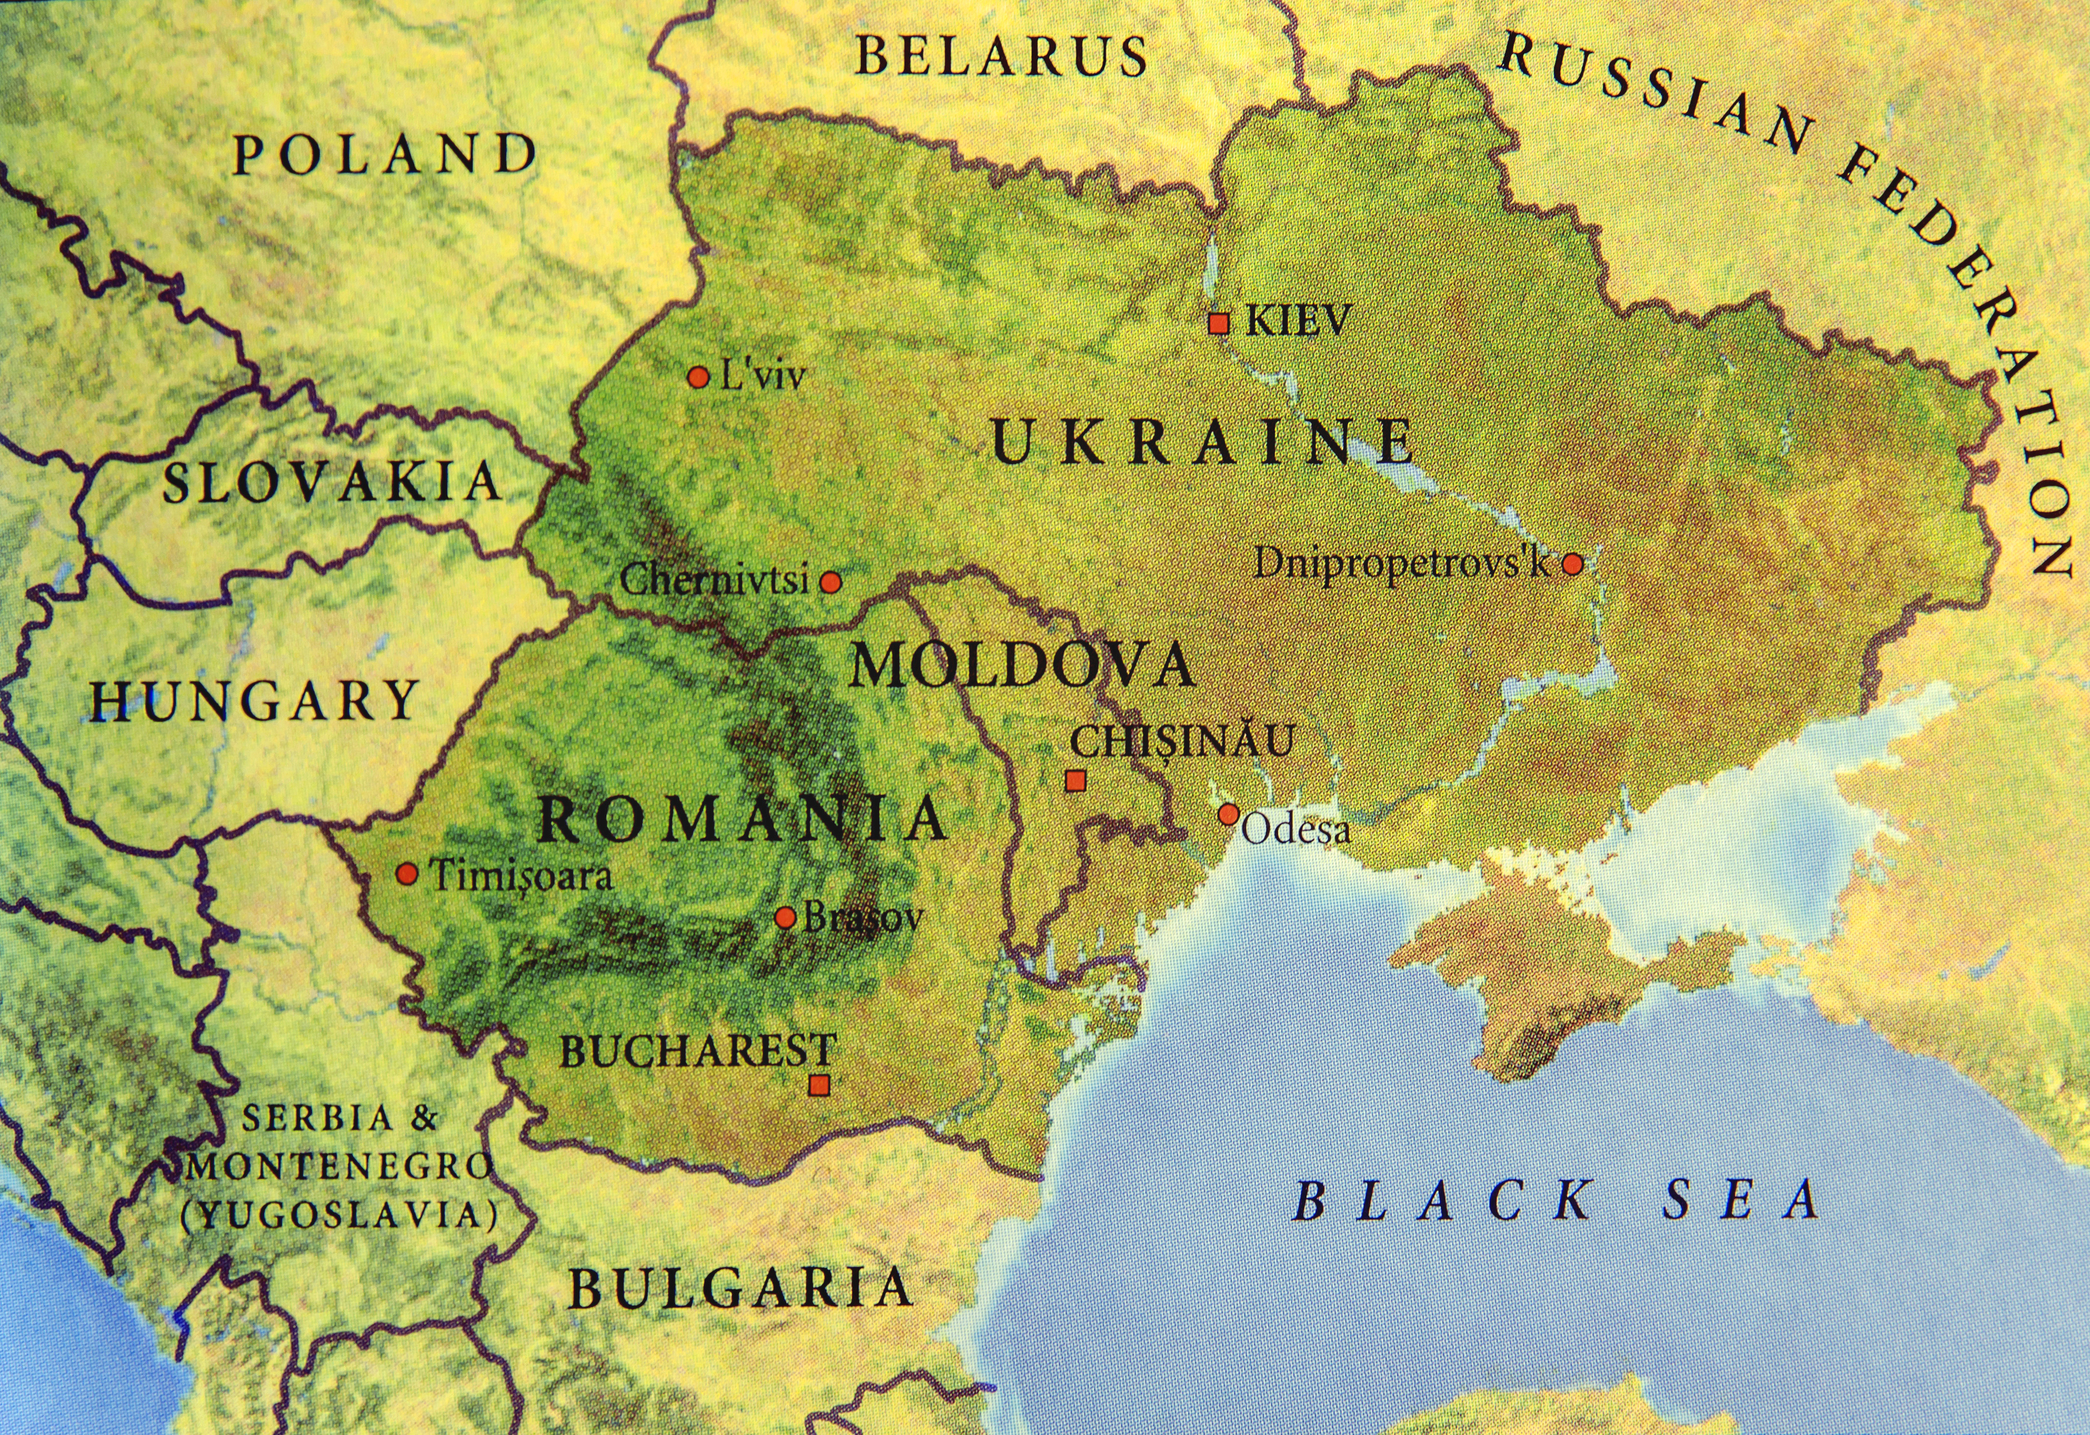 Republica Moldova, România, Ucraina